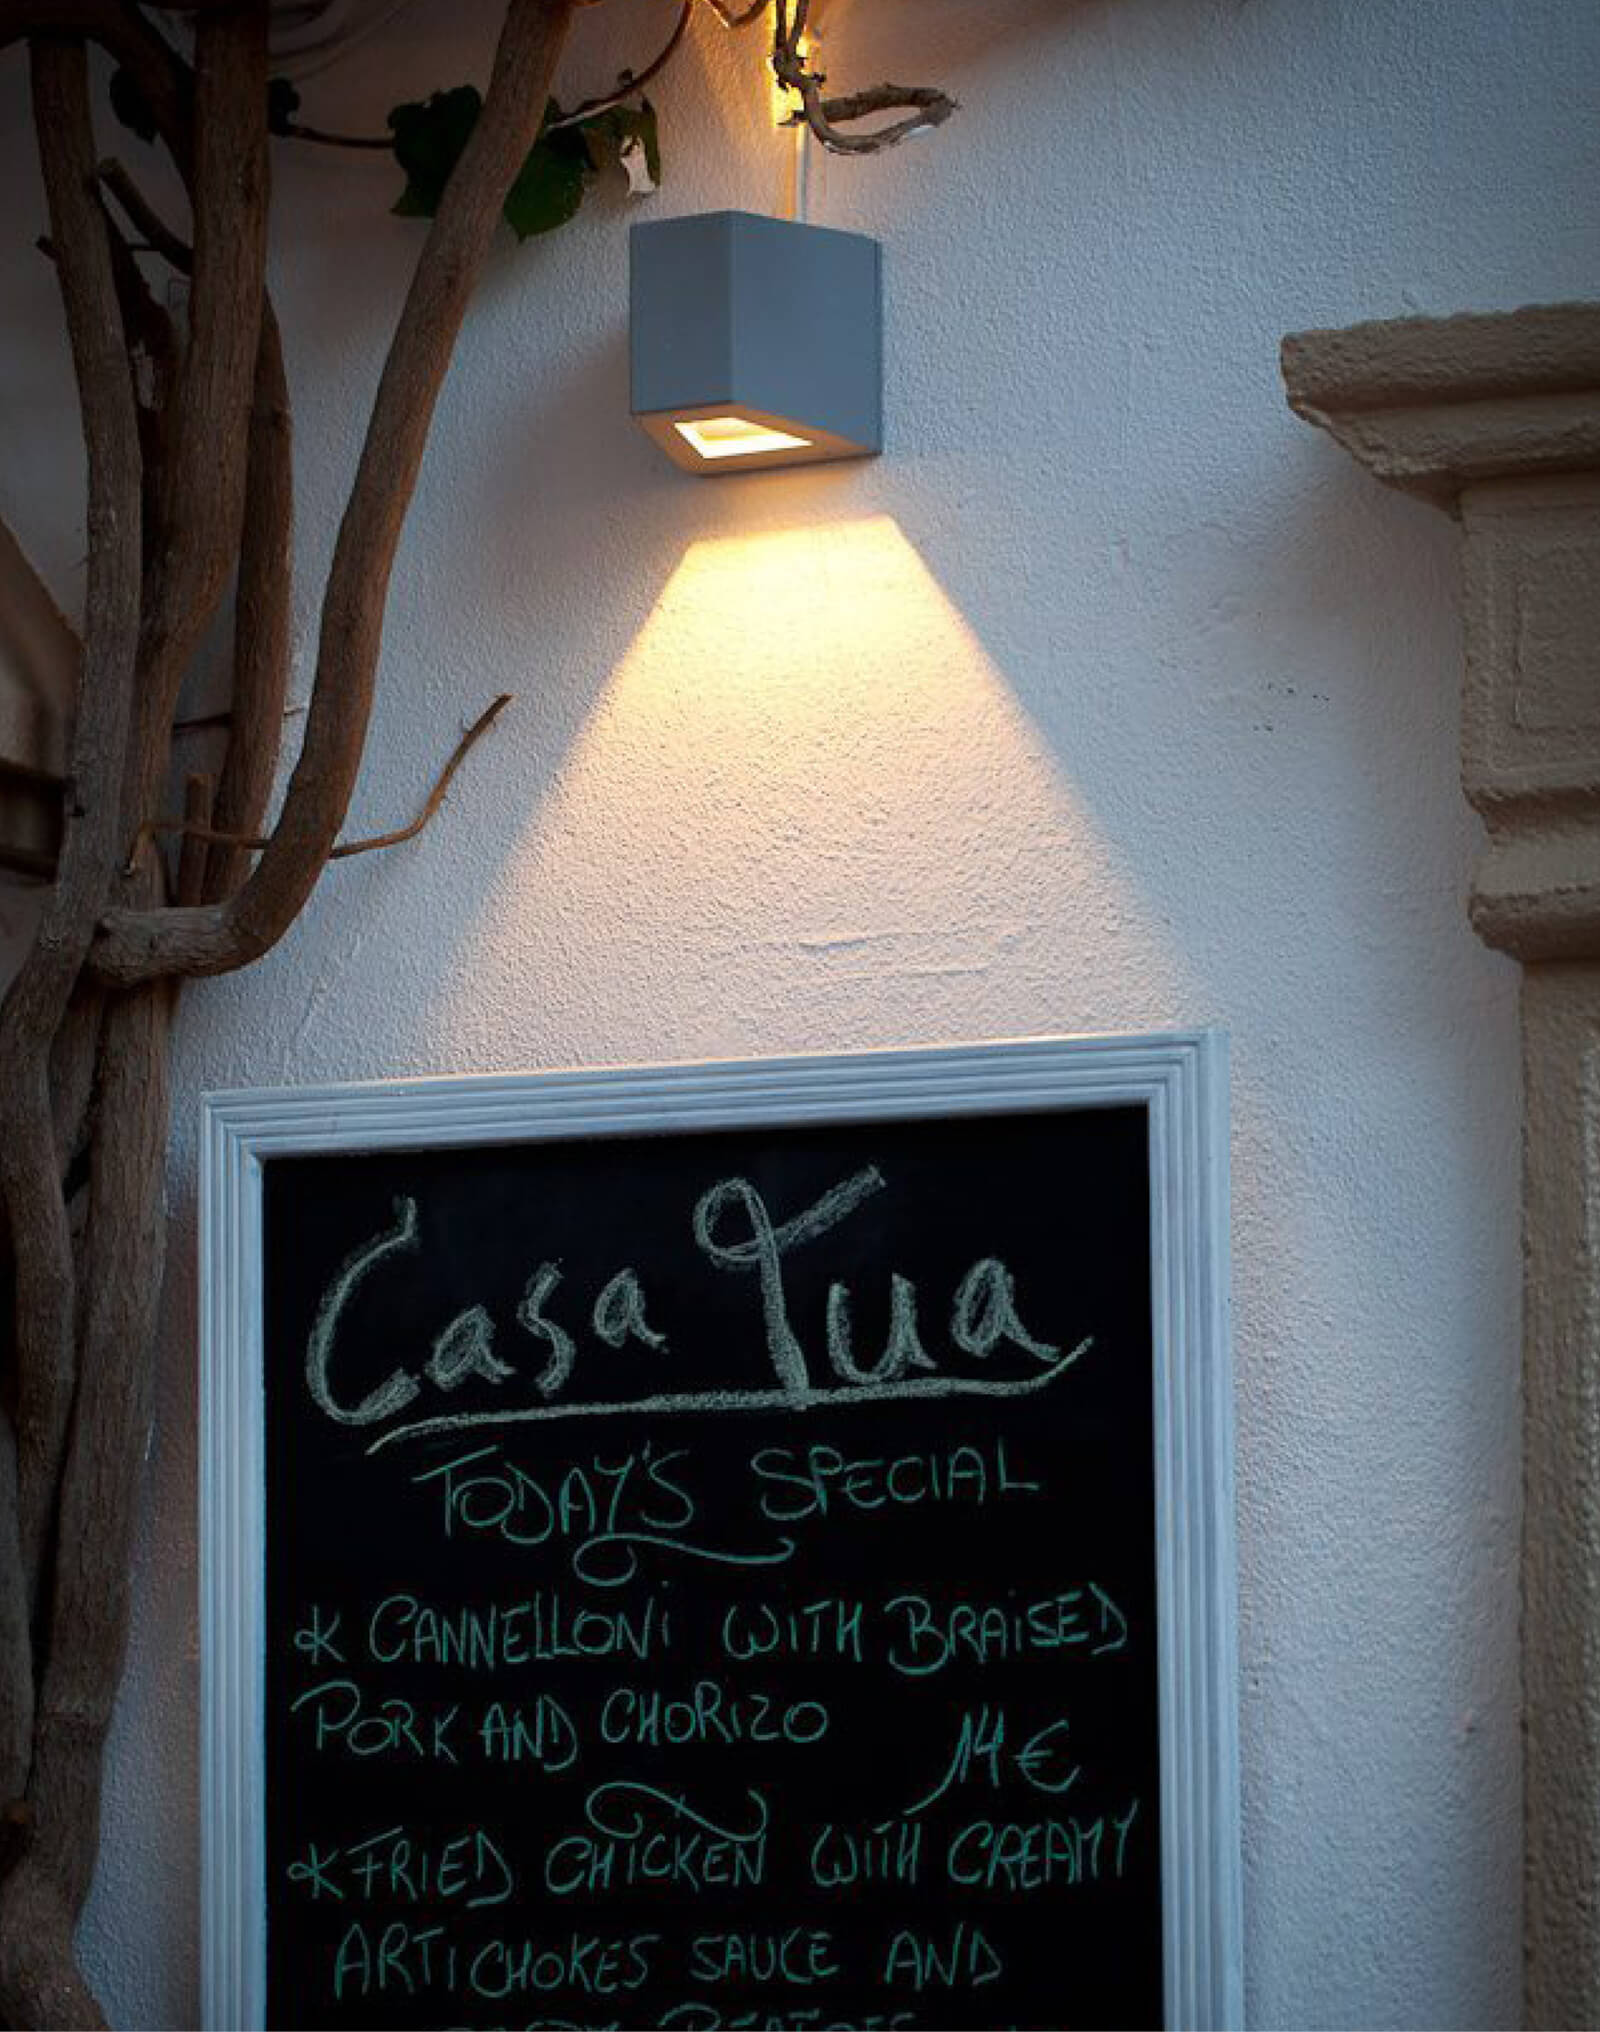 Casa Tua Restaurant menu board